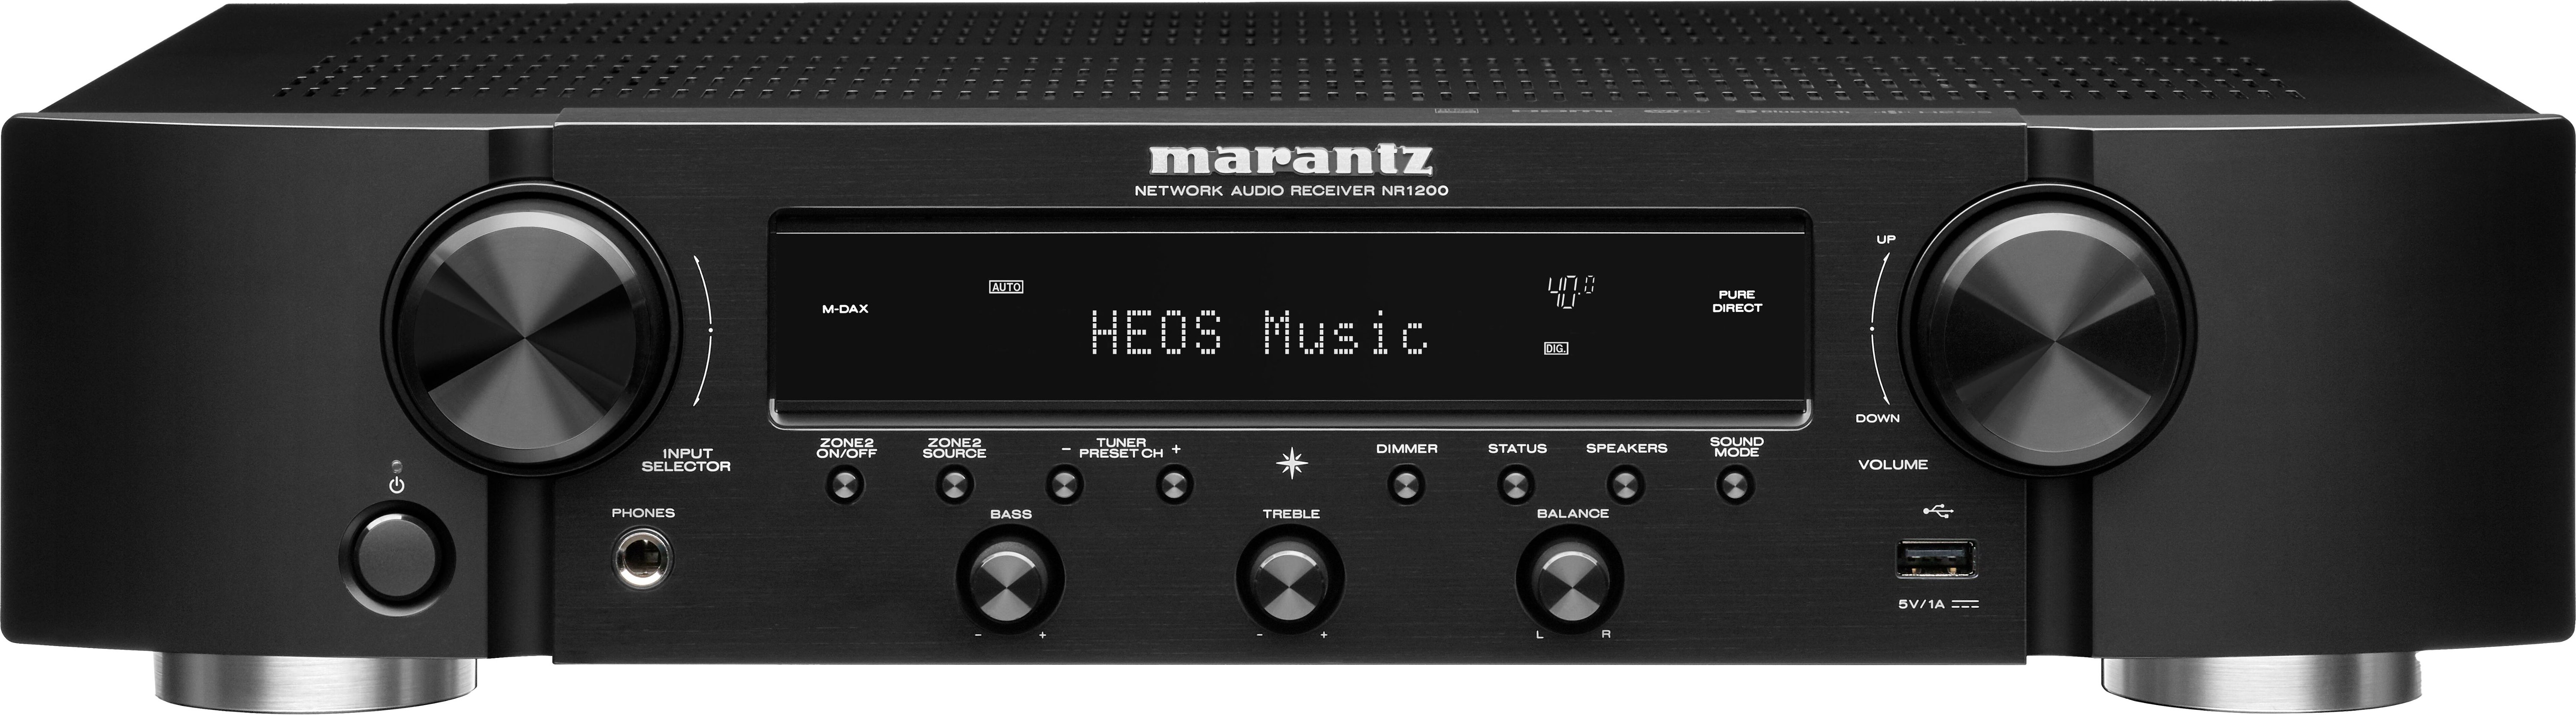 Marantz NR1200 AV Receiver | 2-Ch Home Theater Amp | Wi-Fi ...